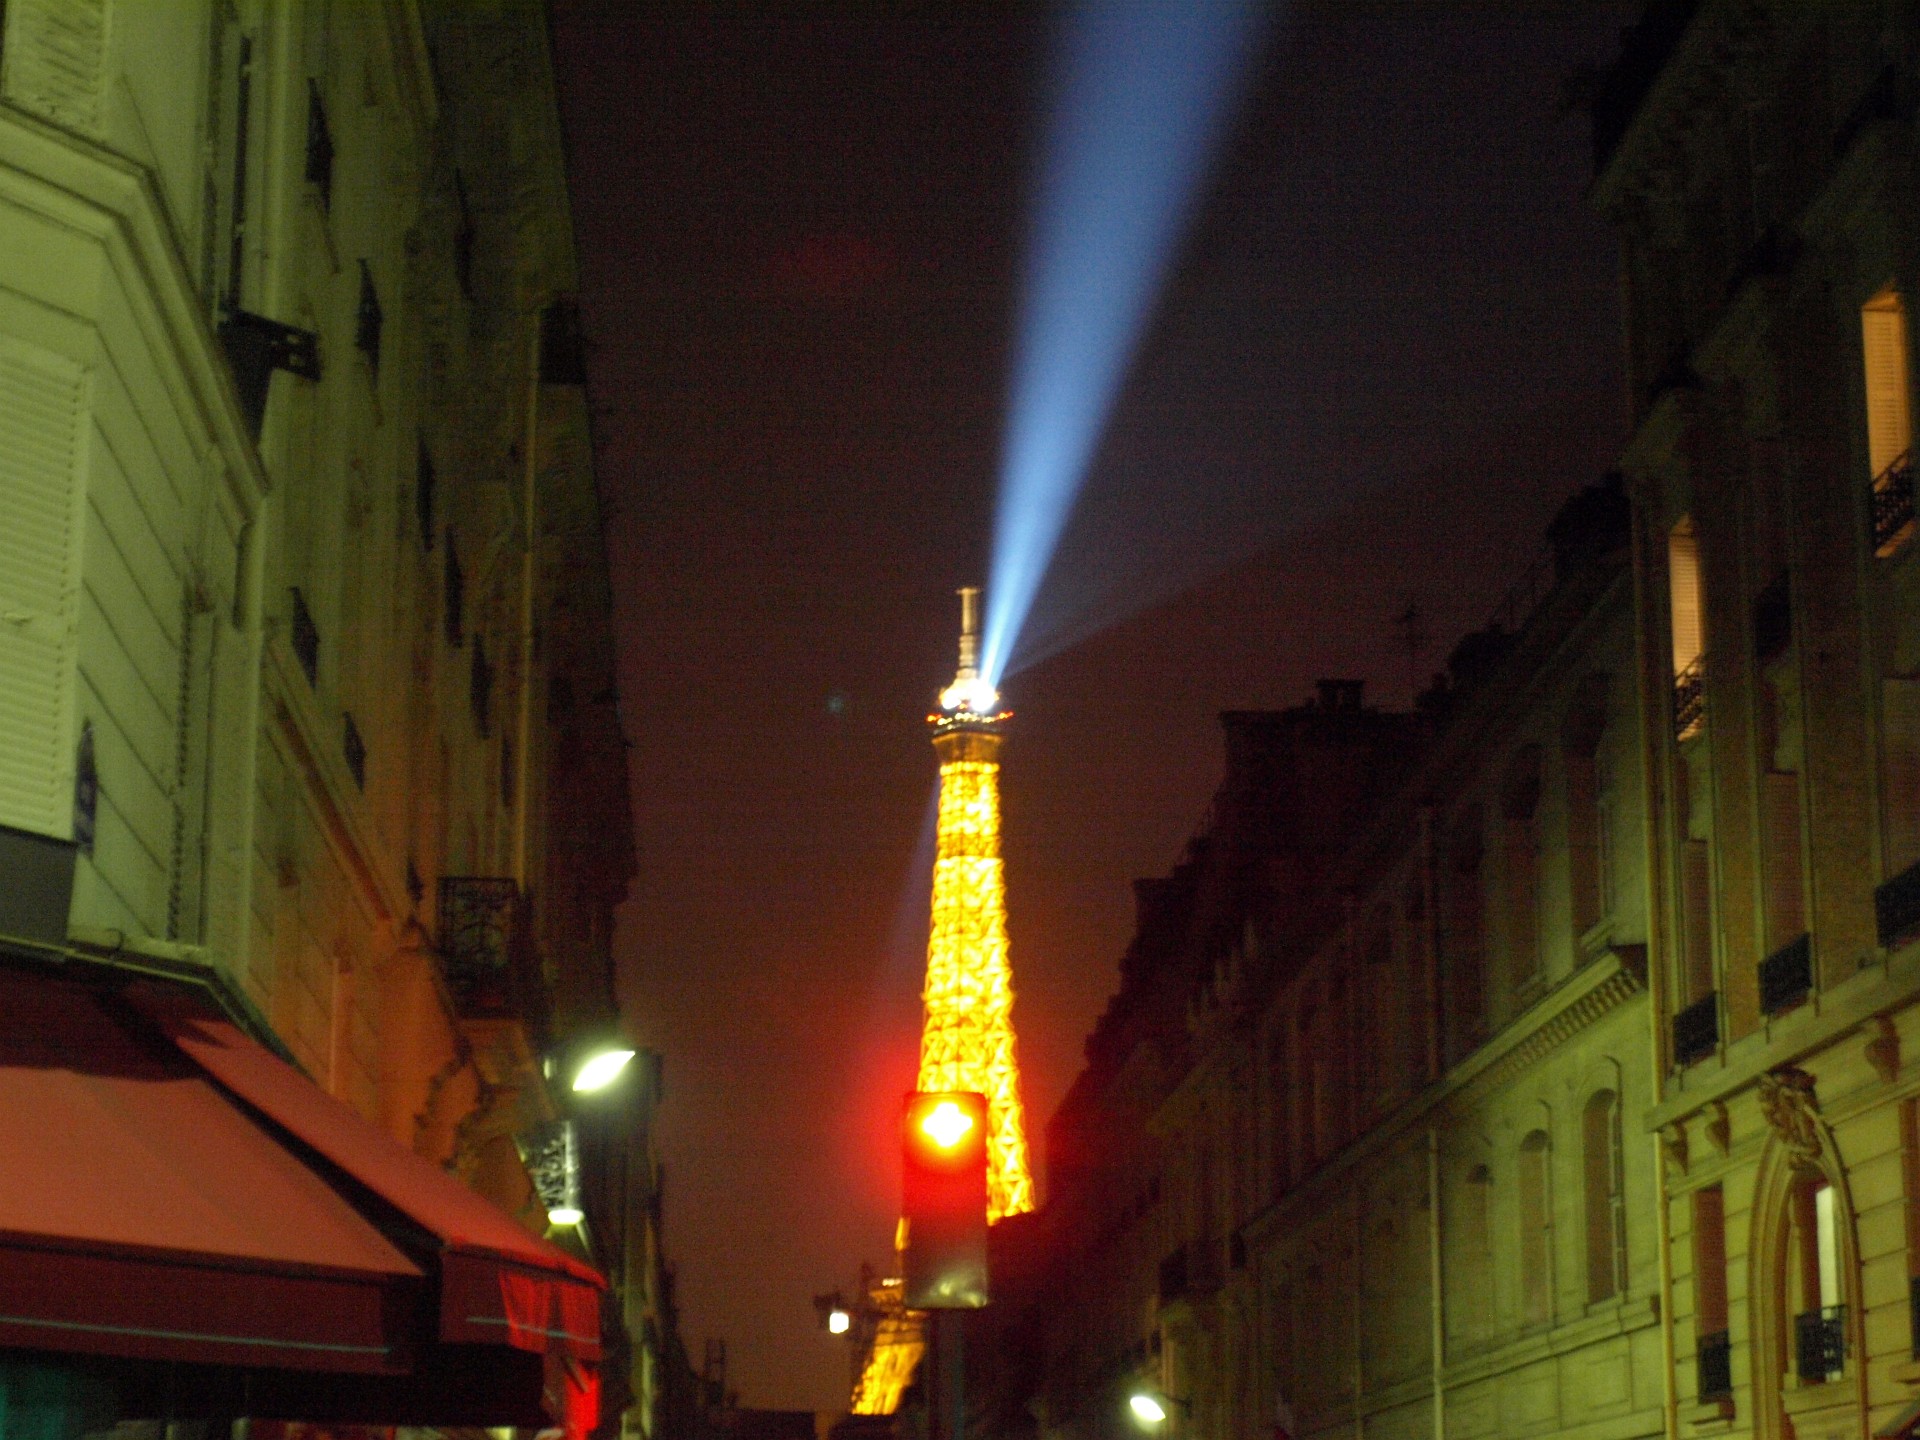 Tour Eiffel at Night